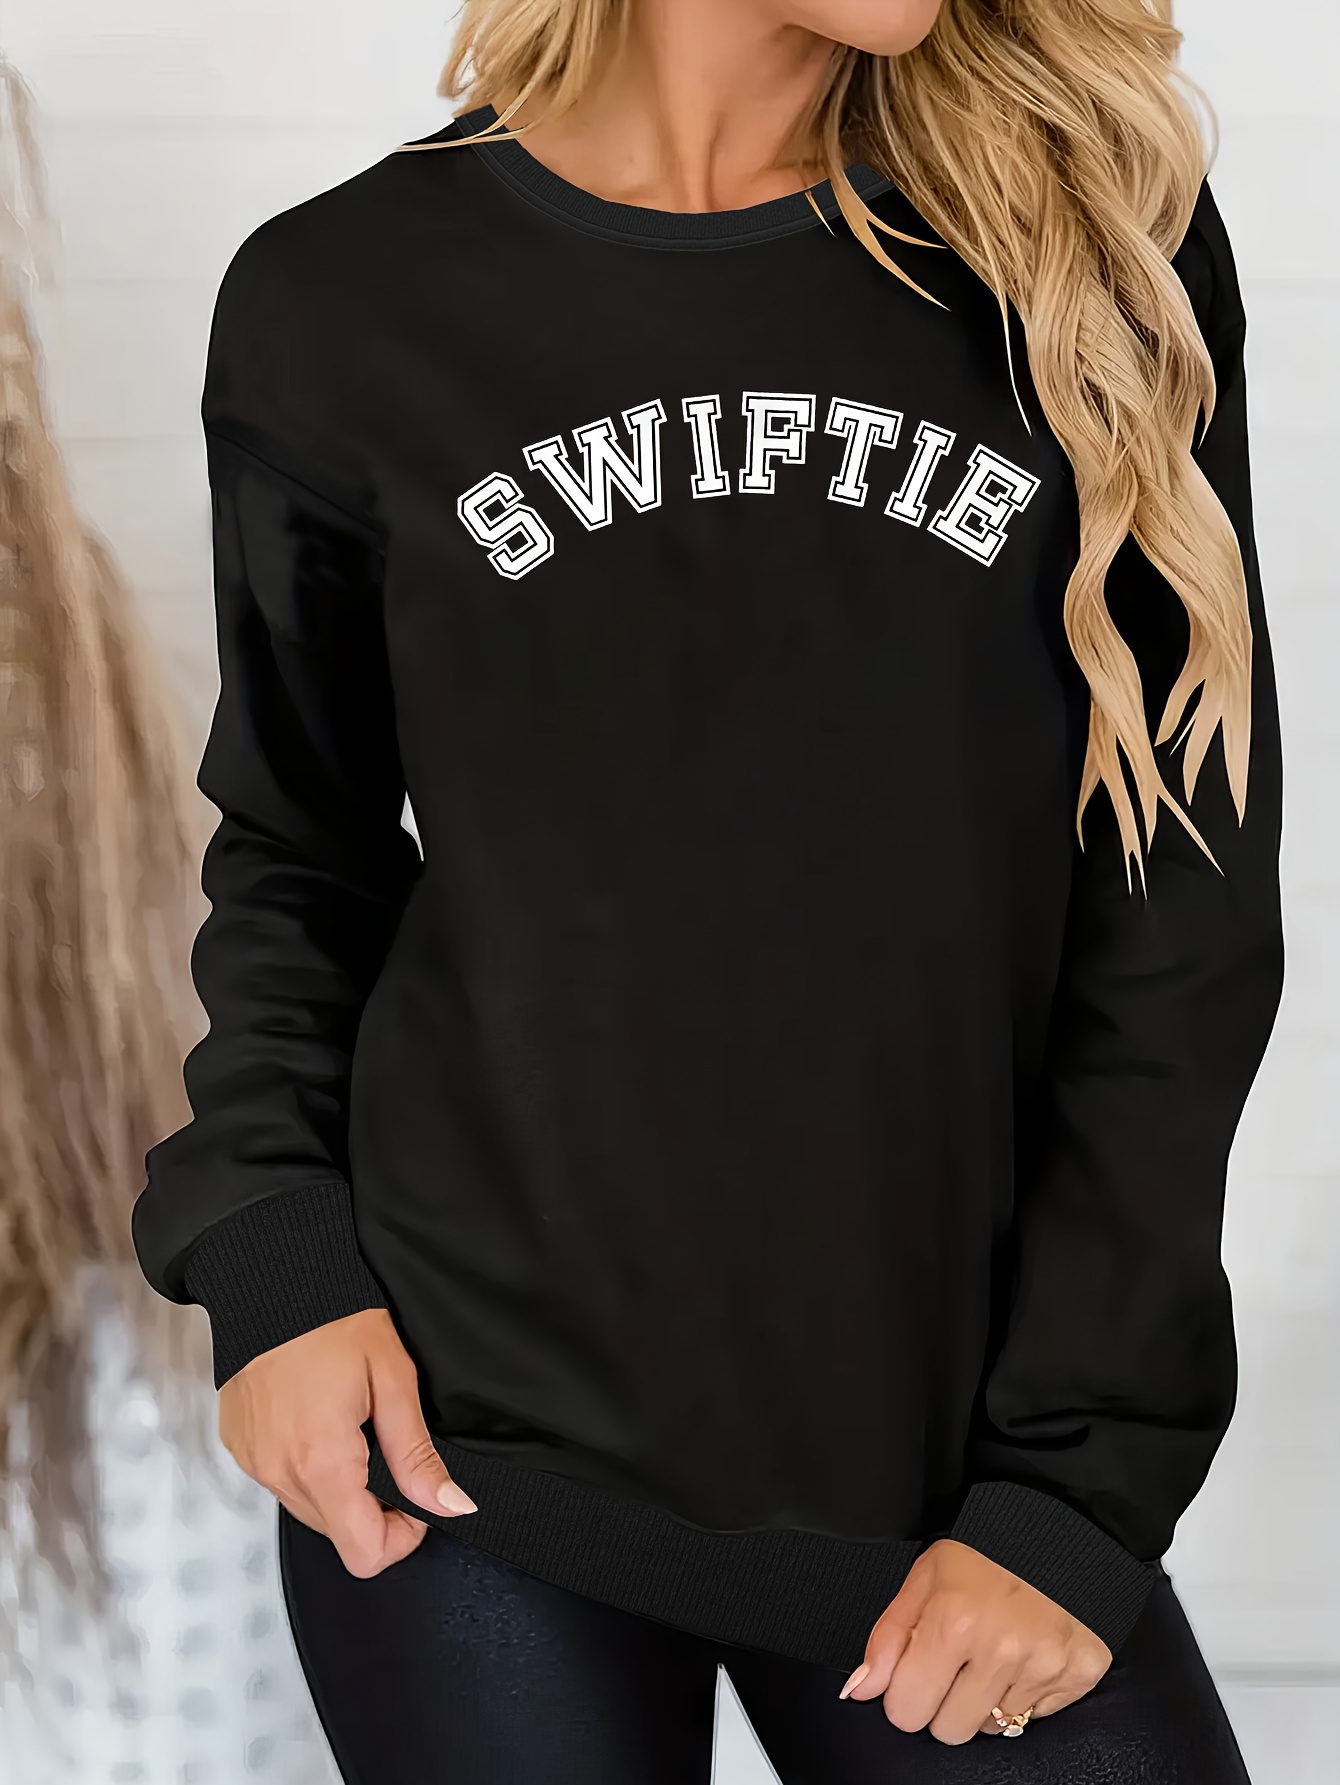 TBKOMH Taylor Swift Sweatshirt, Damenmode Langarm Namibia